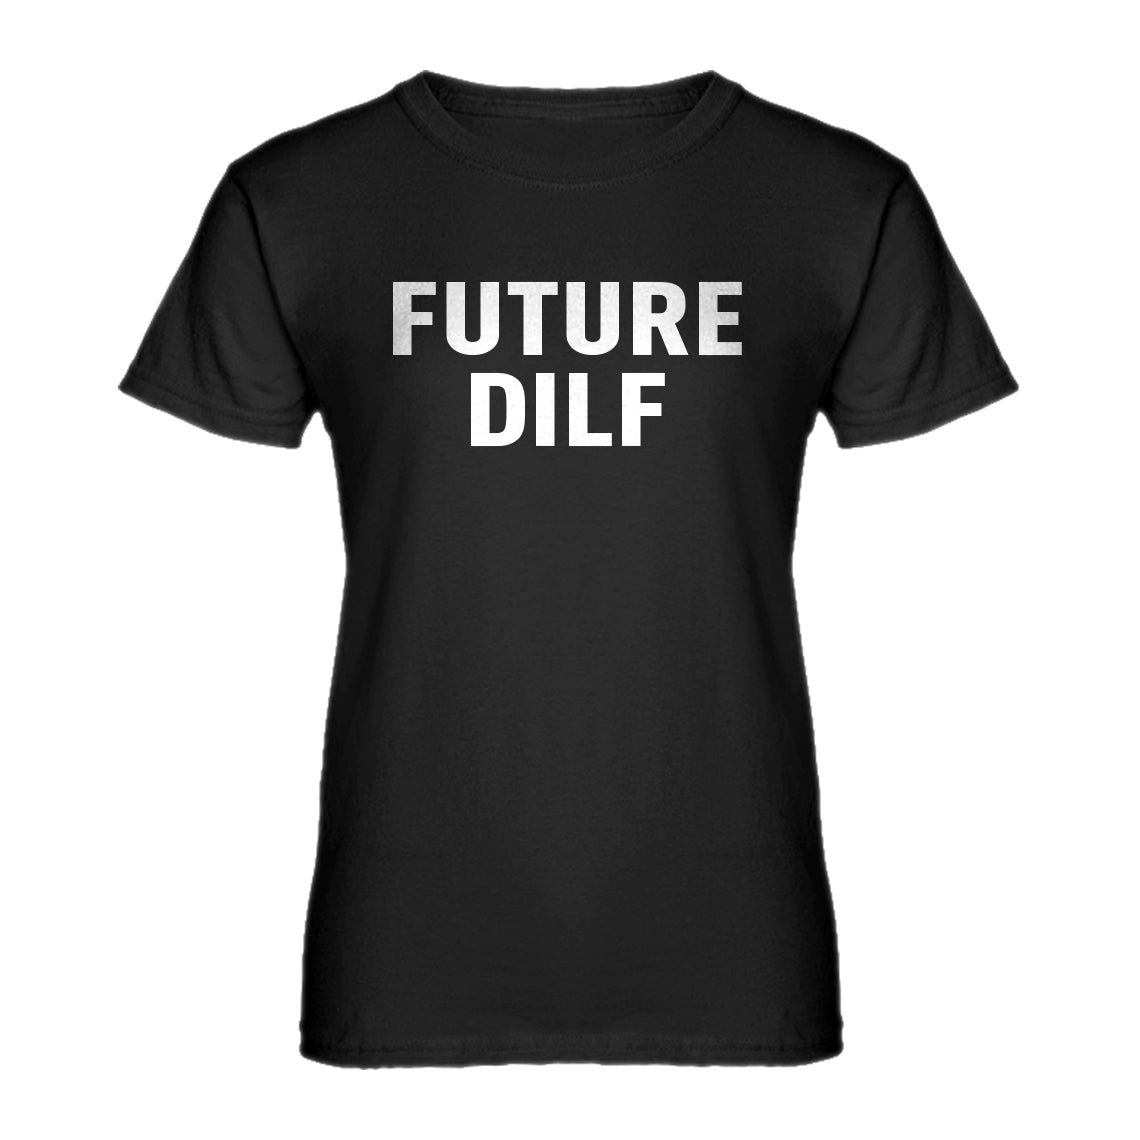 Womens FUTURE DILF Ladies' T-shirt